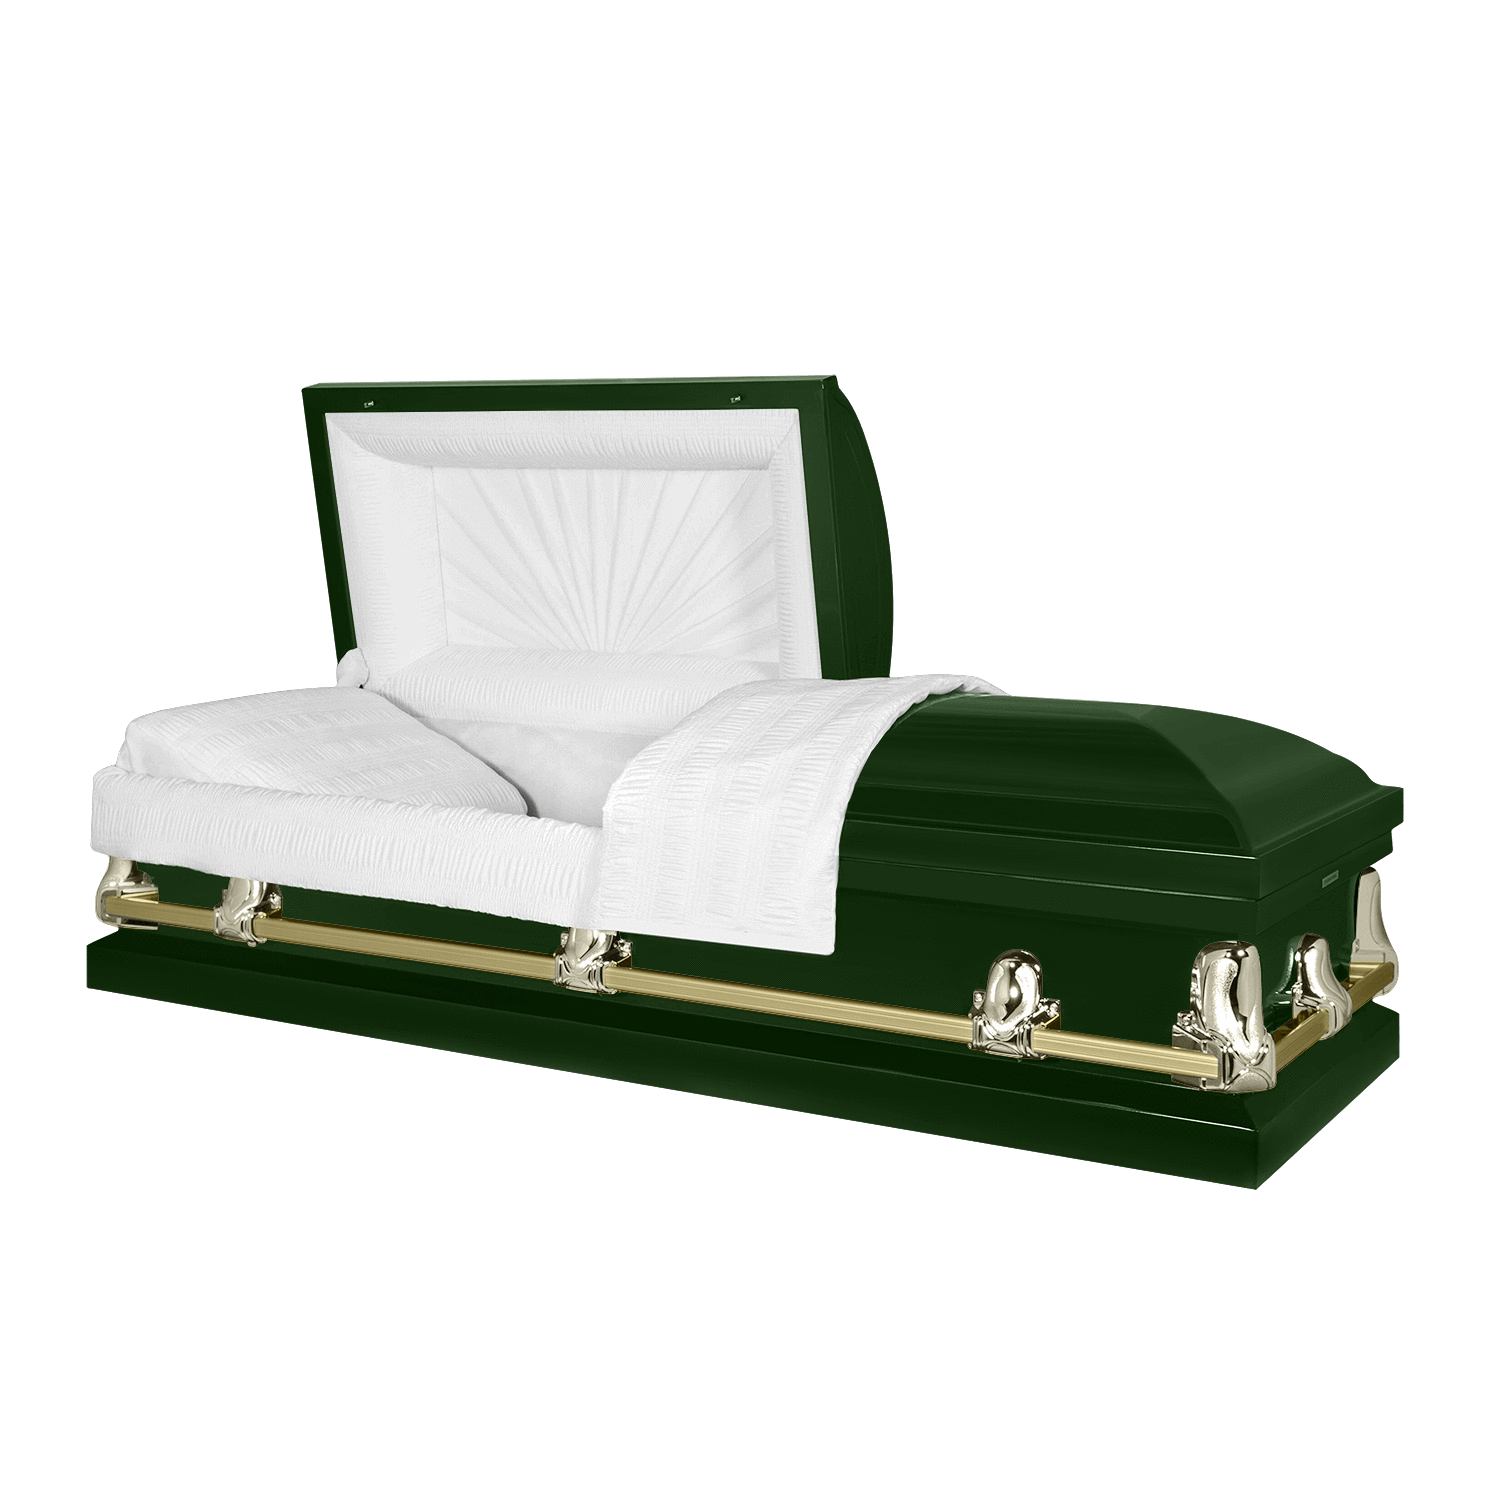 Orion Series | Green Steel Burial Casket with White Interior - Titan Casket